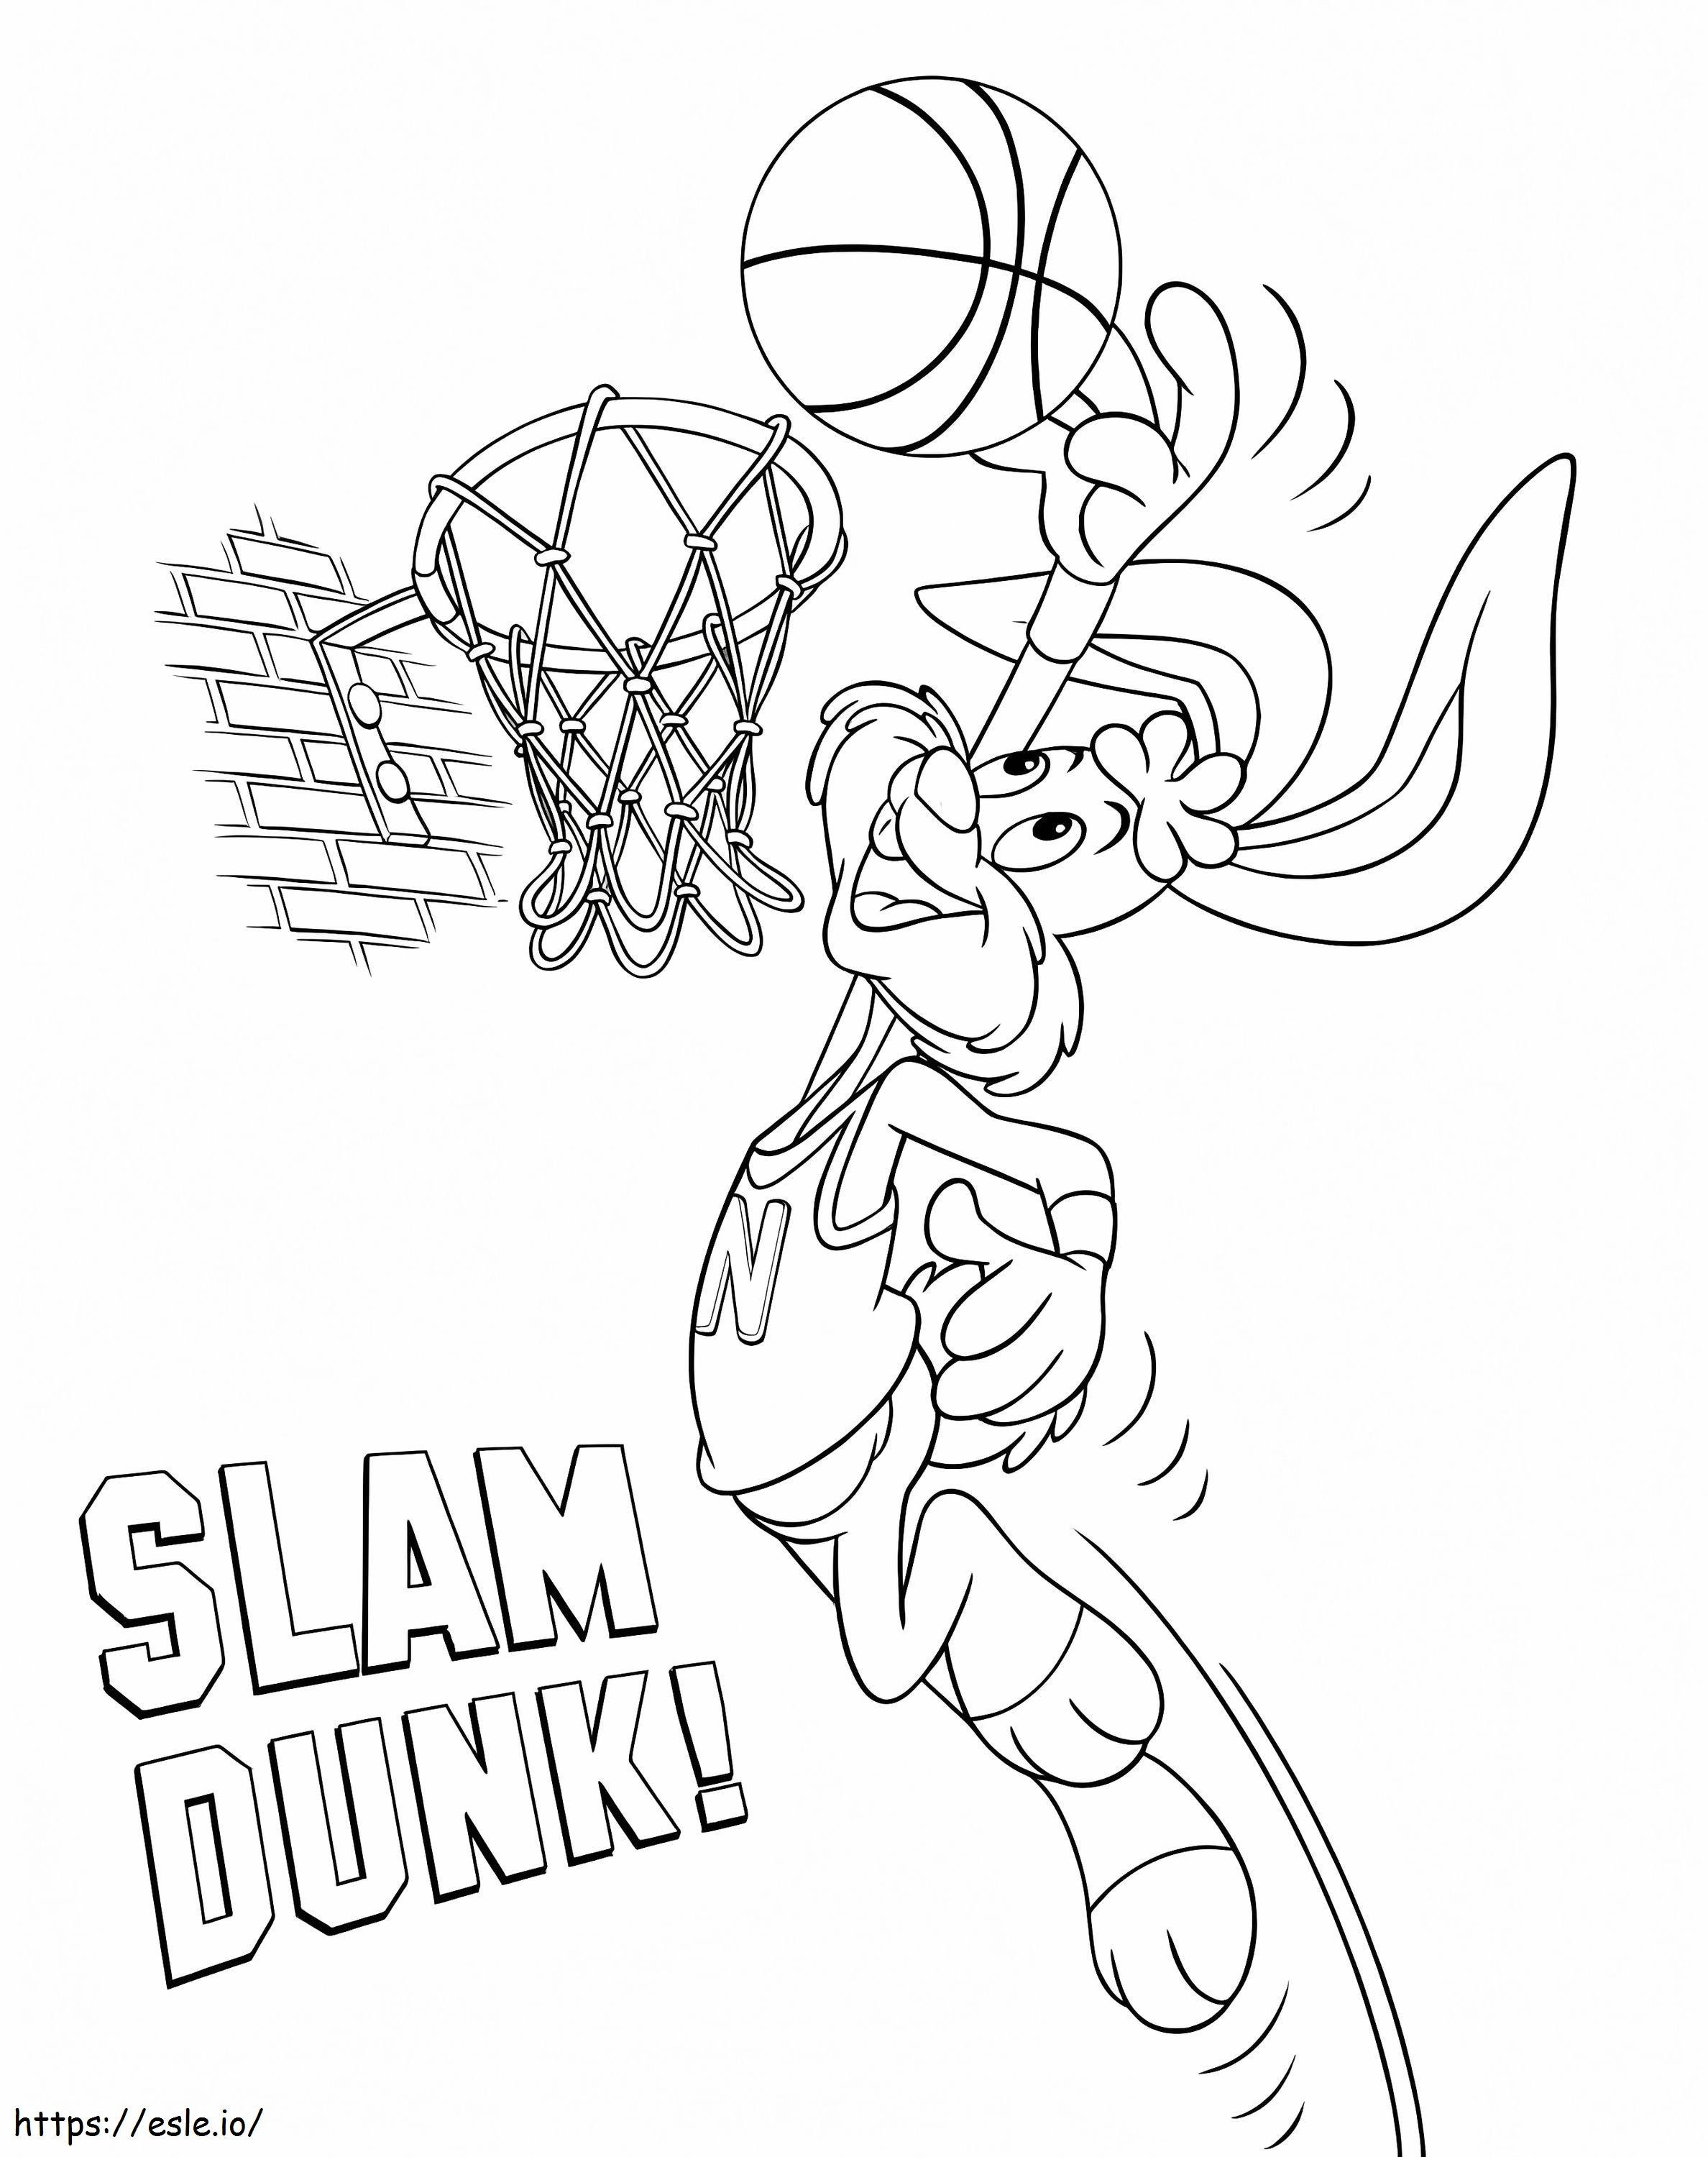 Nesquik Slam Dunk coloring page